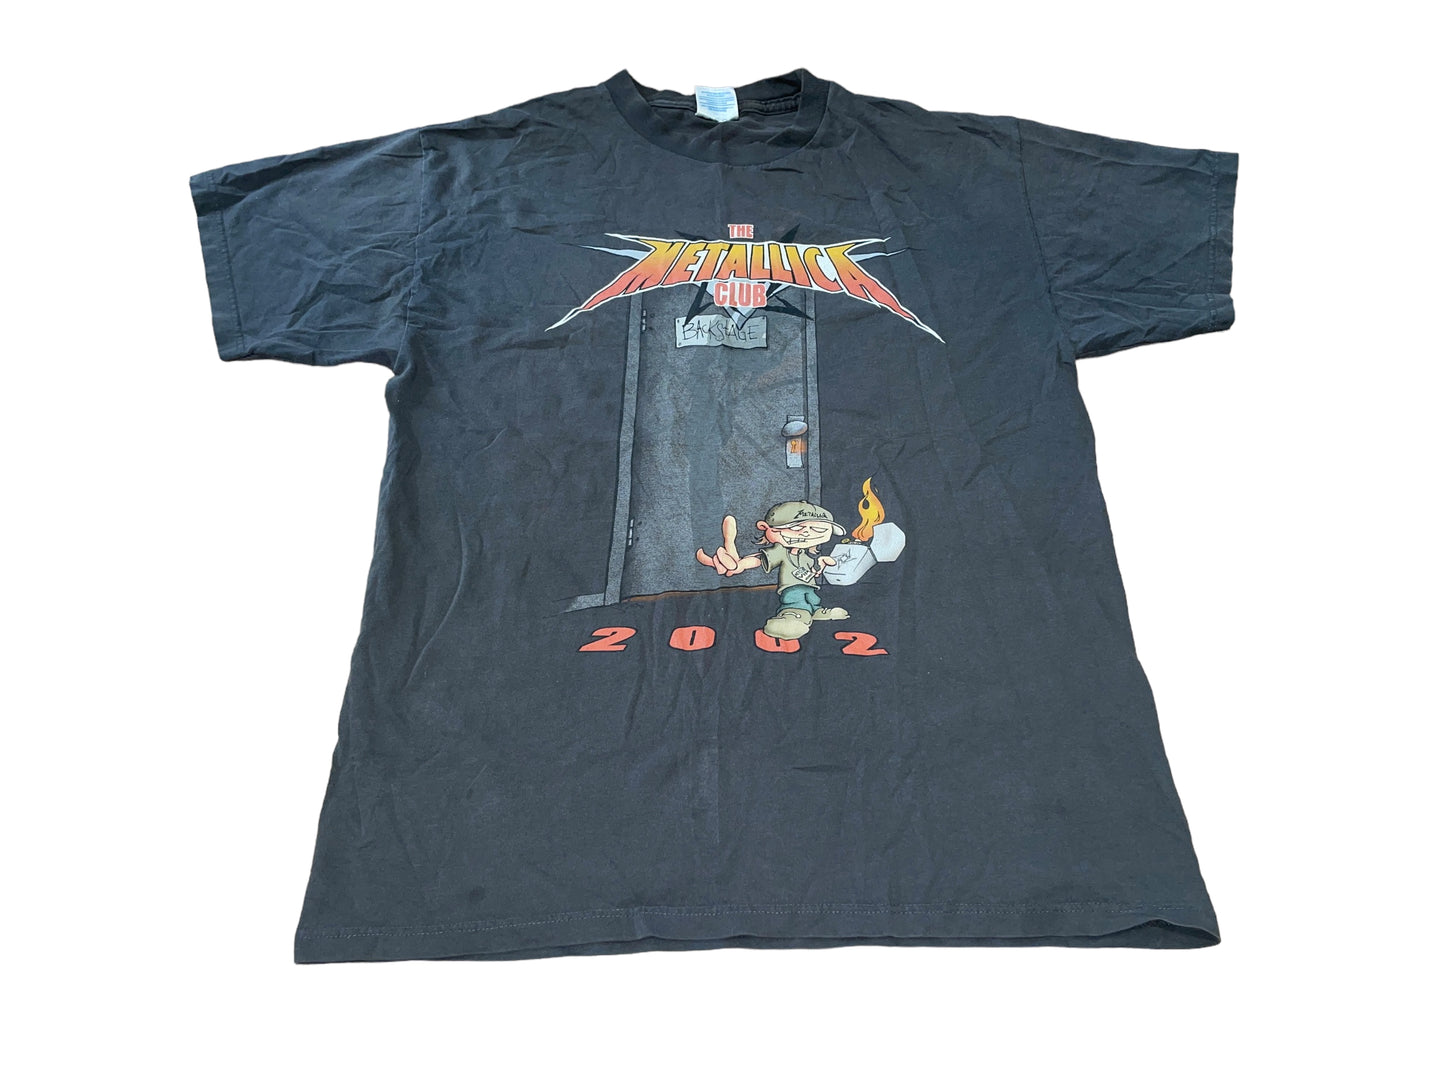 Vintage 2002 Metallica T-Shirt